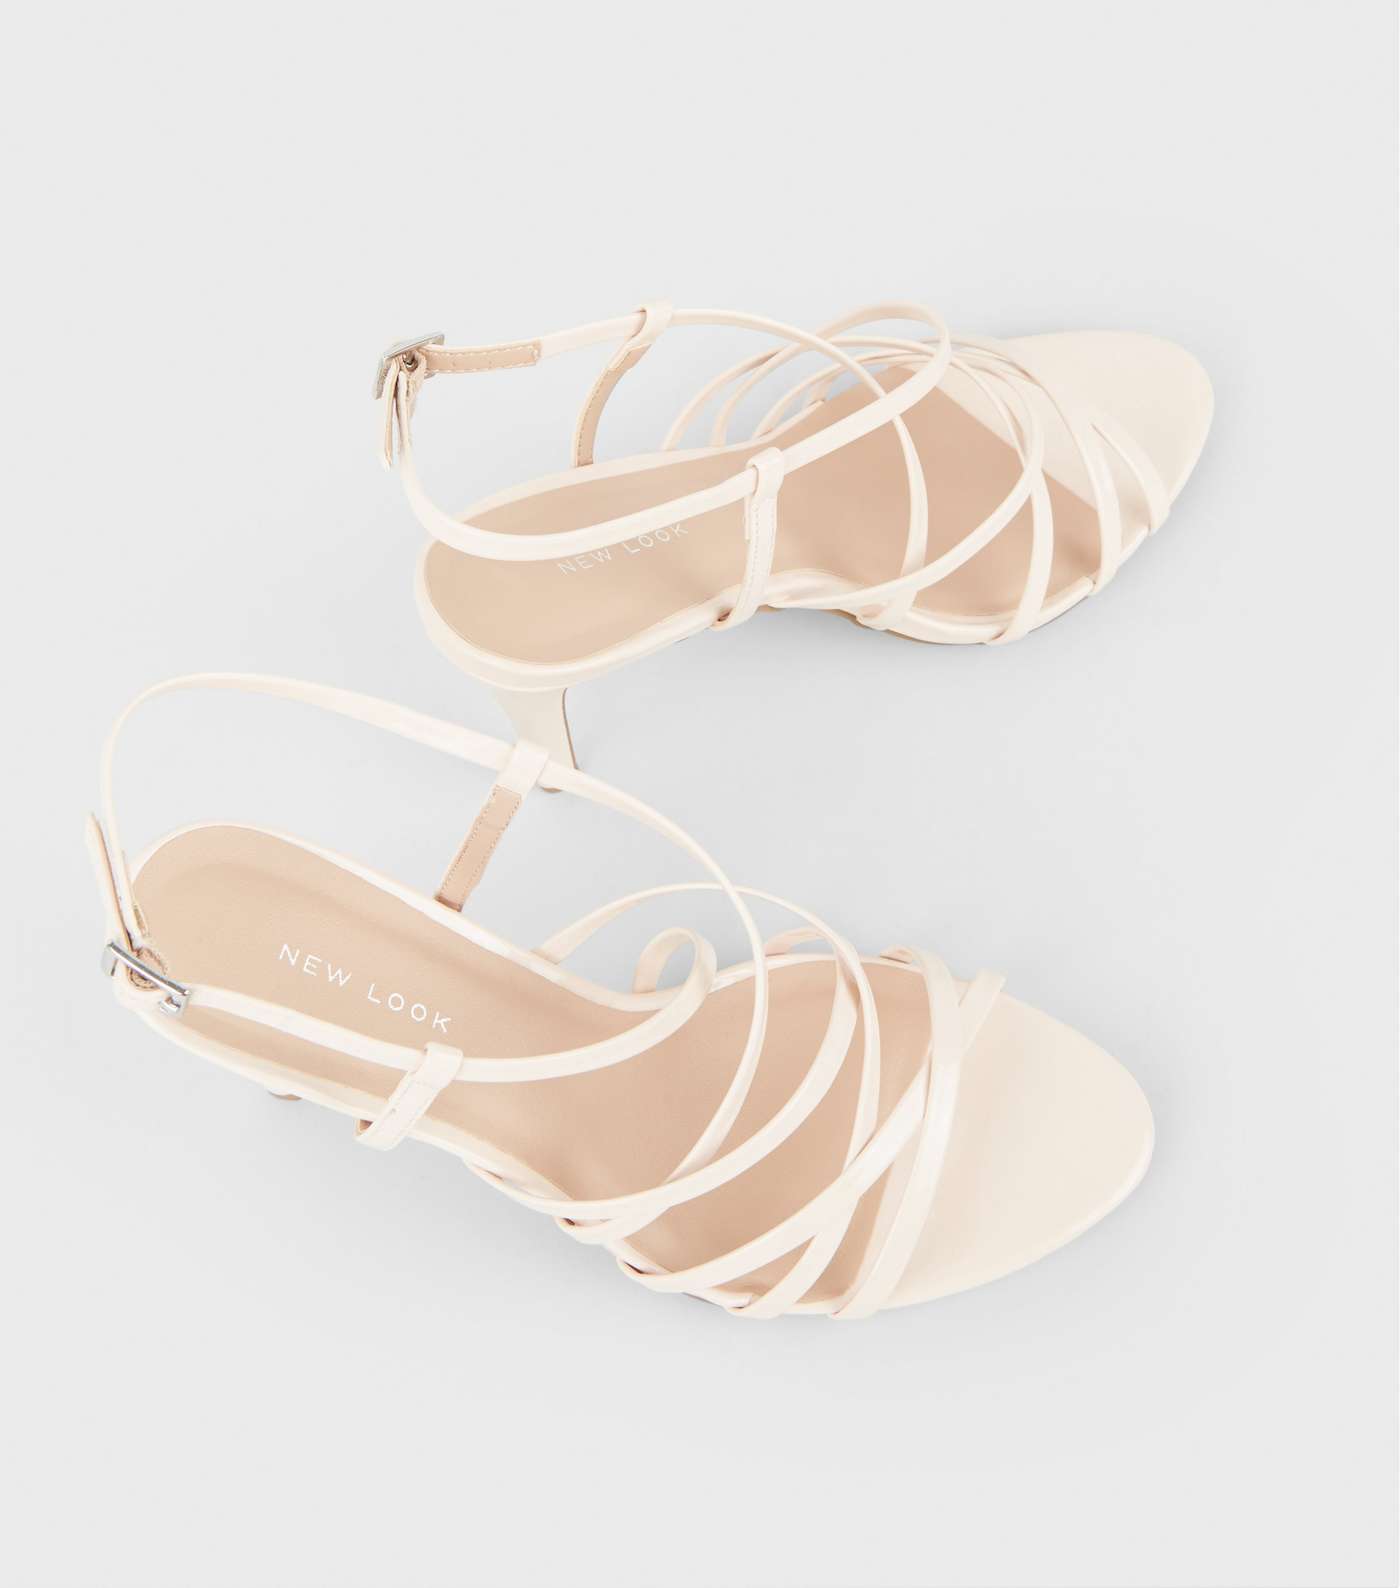 Cream Patent Strappy Stiletto Heel Sandals Image 4